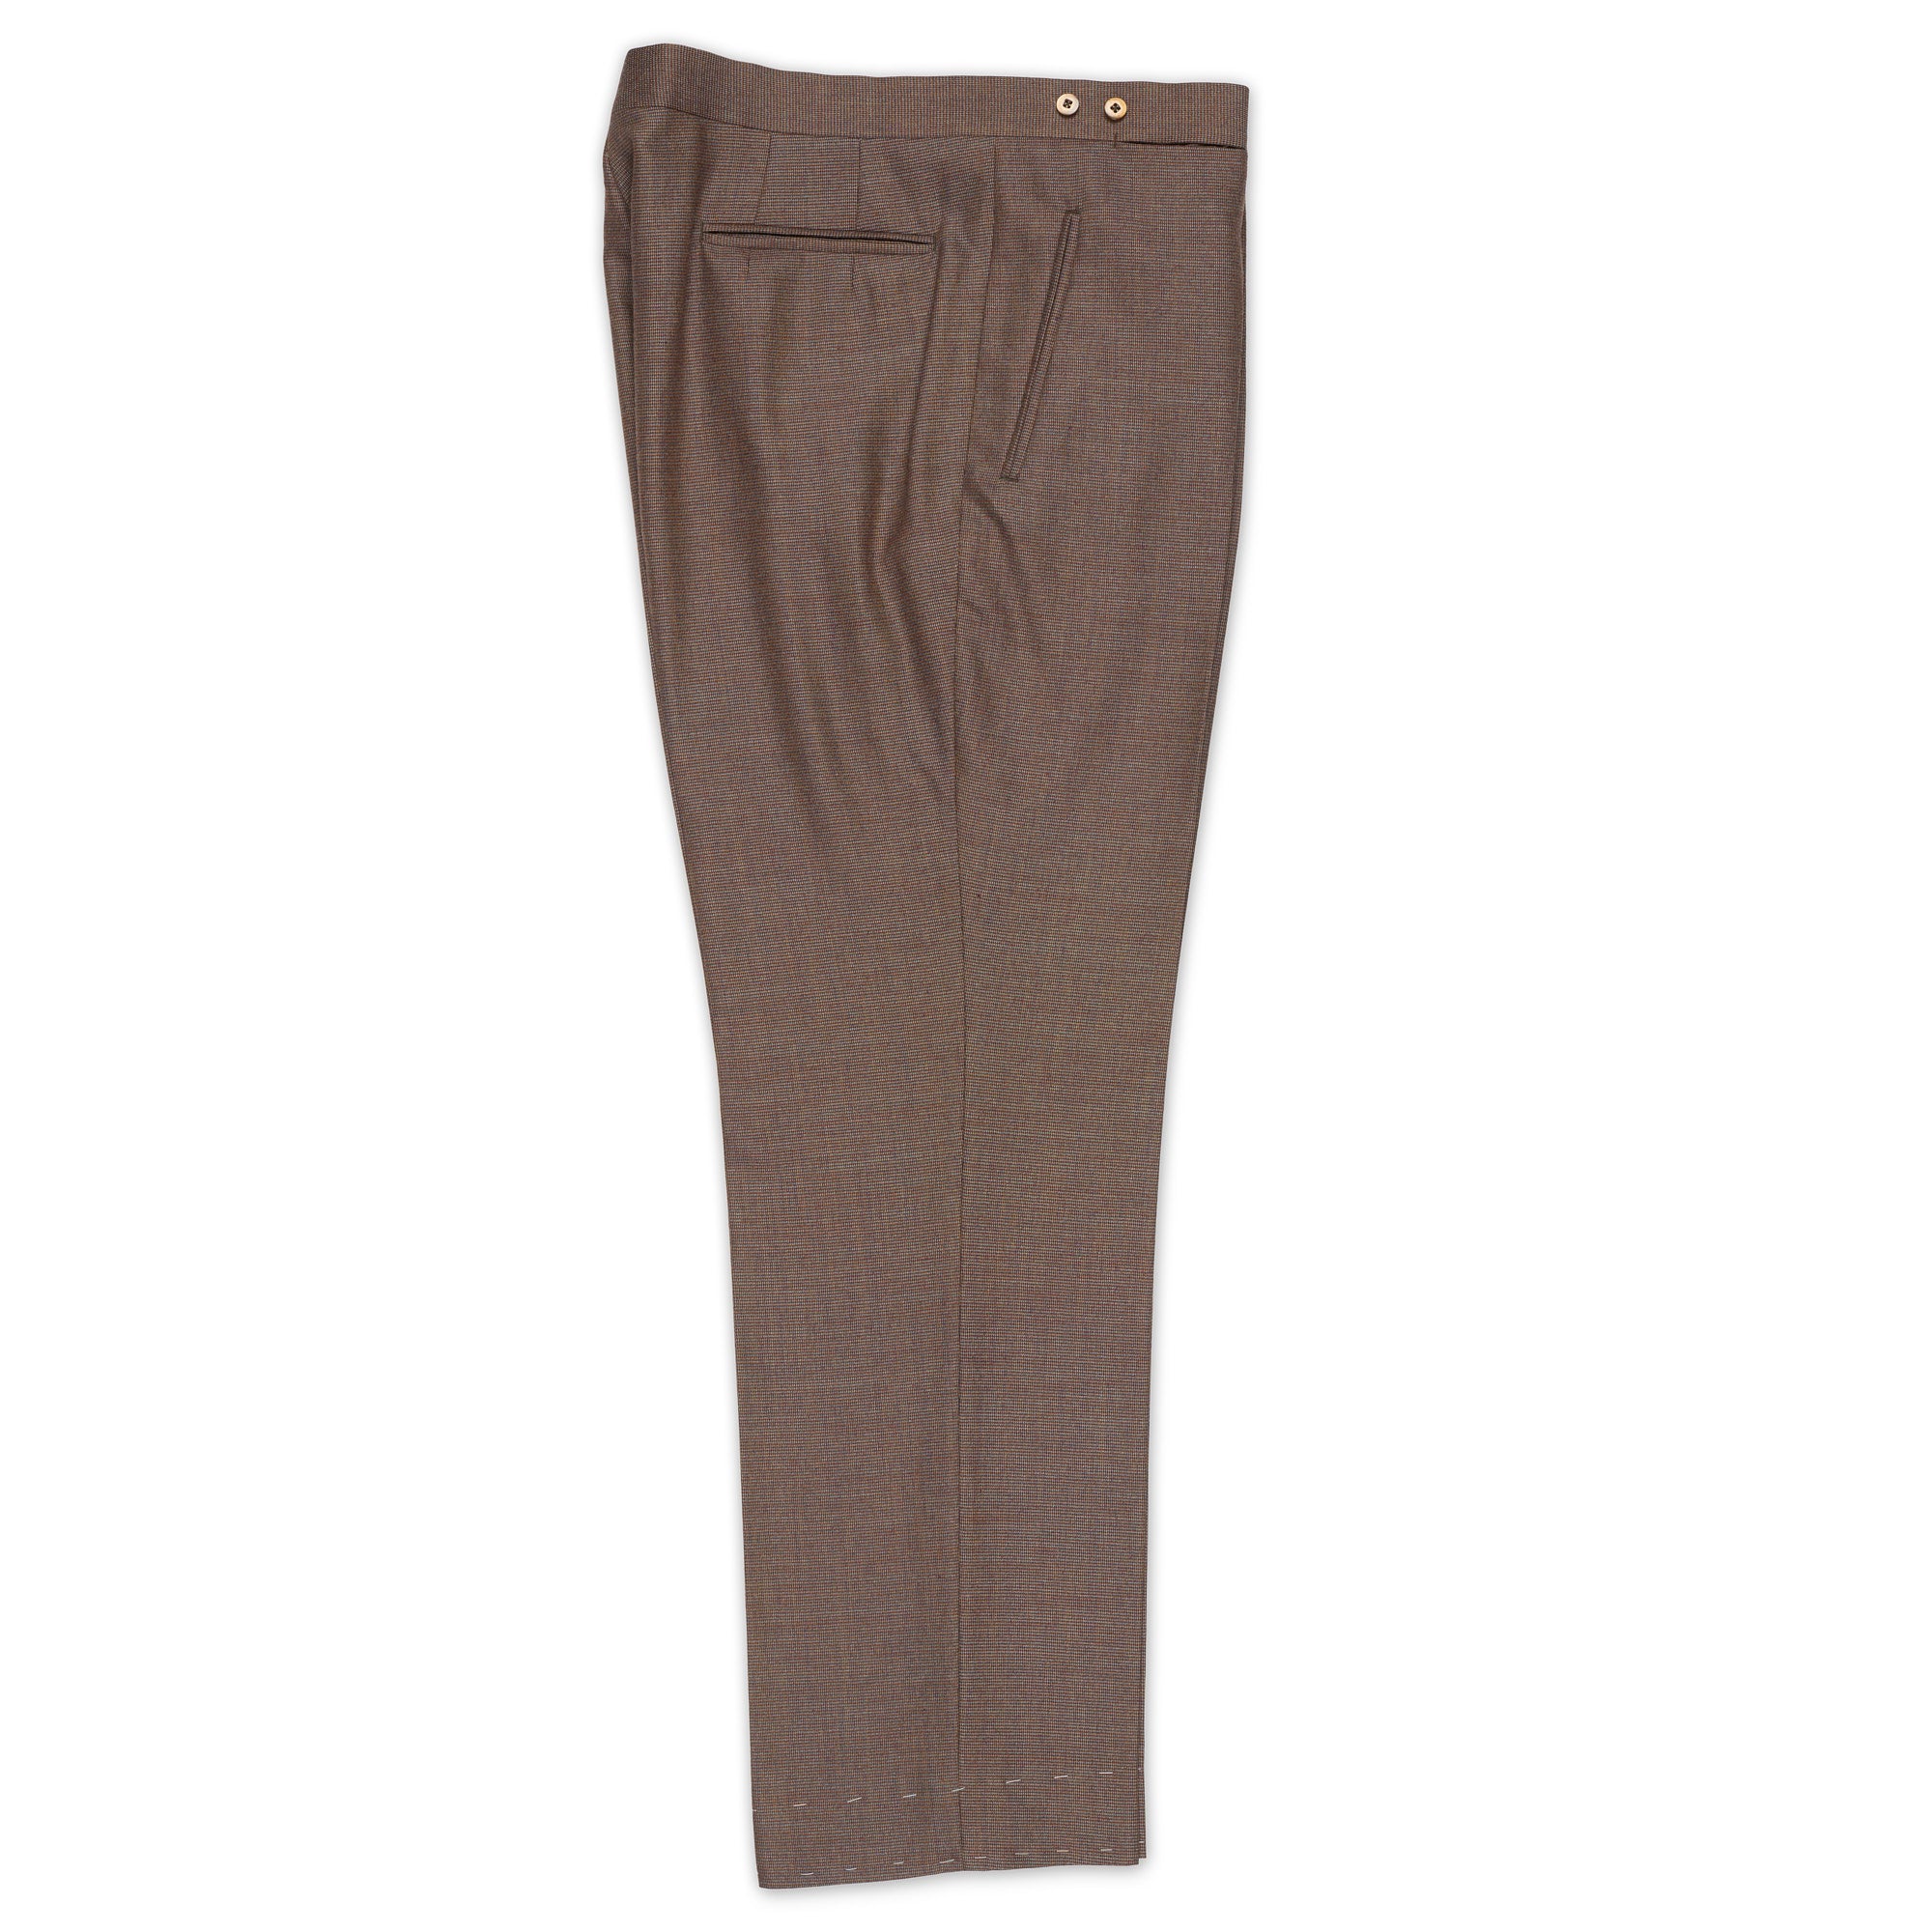 BESPOKE ATHENS Handmade Brown Wool Flat Front Dress Pants EU 56 NEW US 40